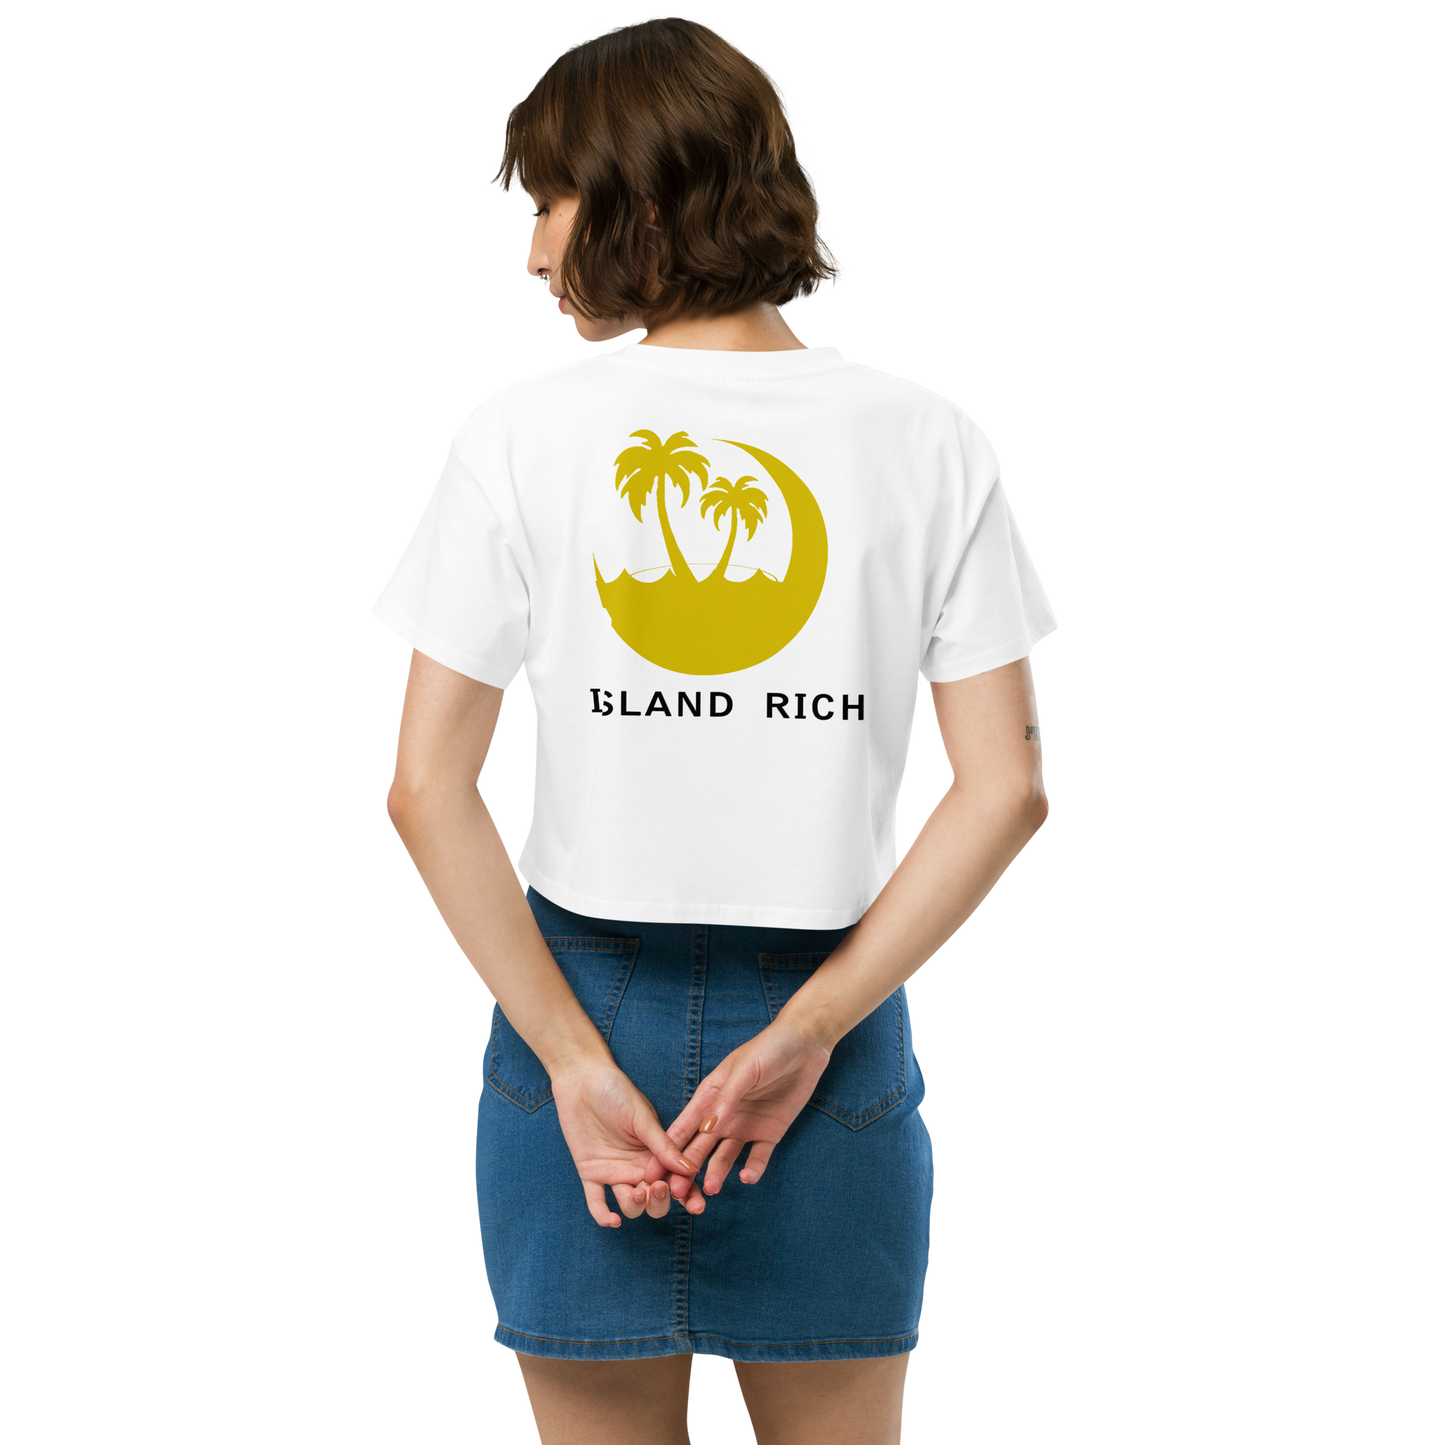 Women’s island rich crop top